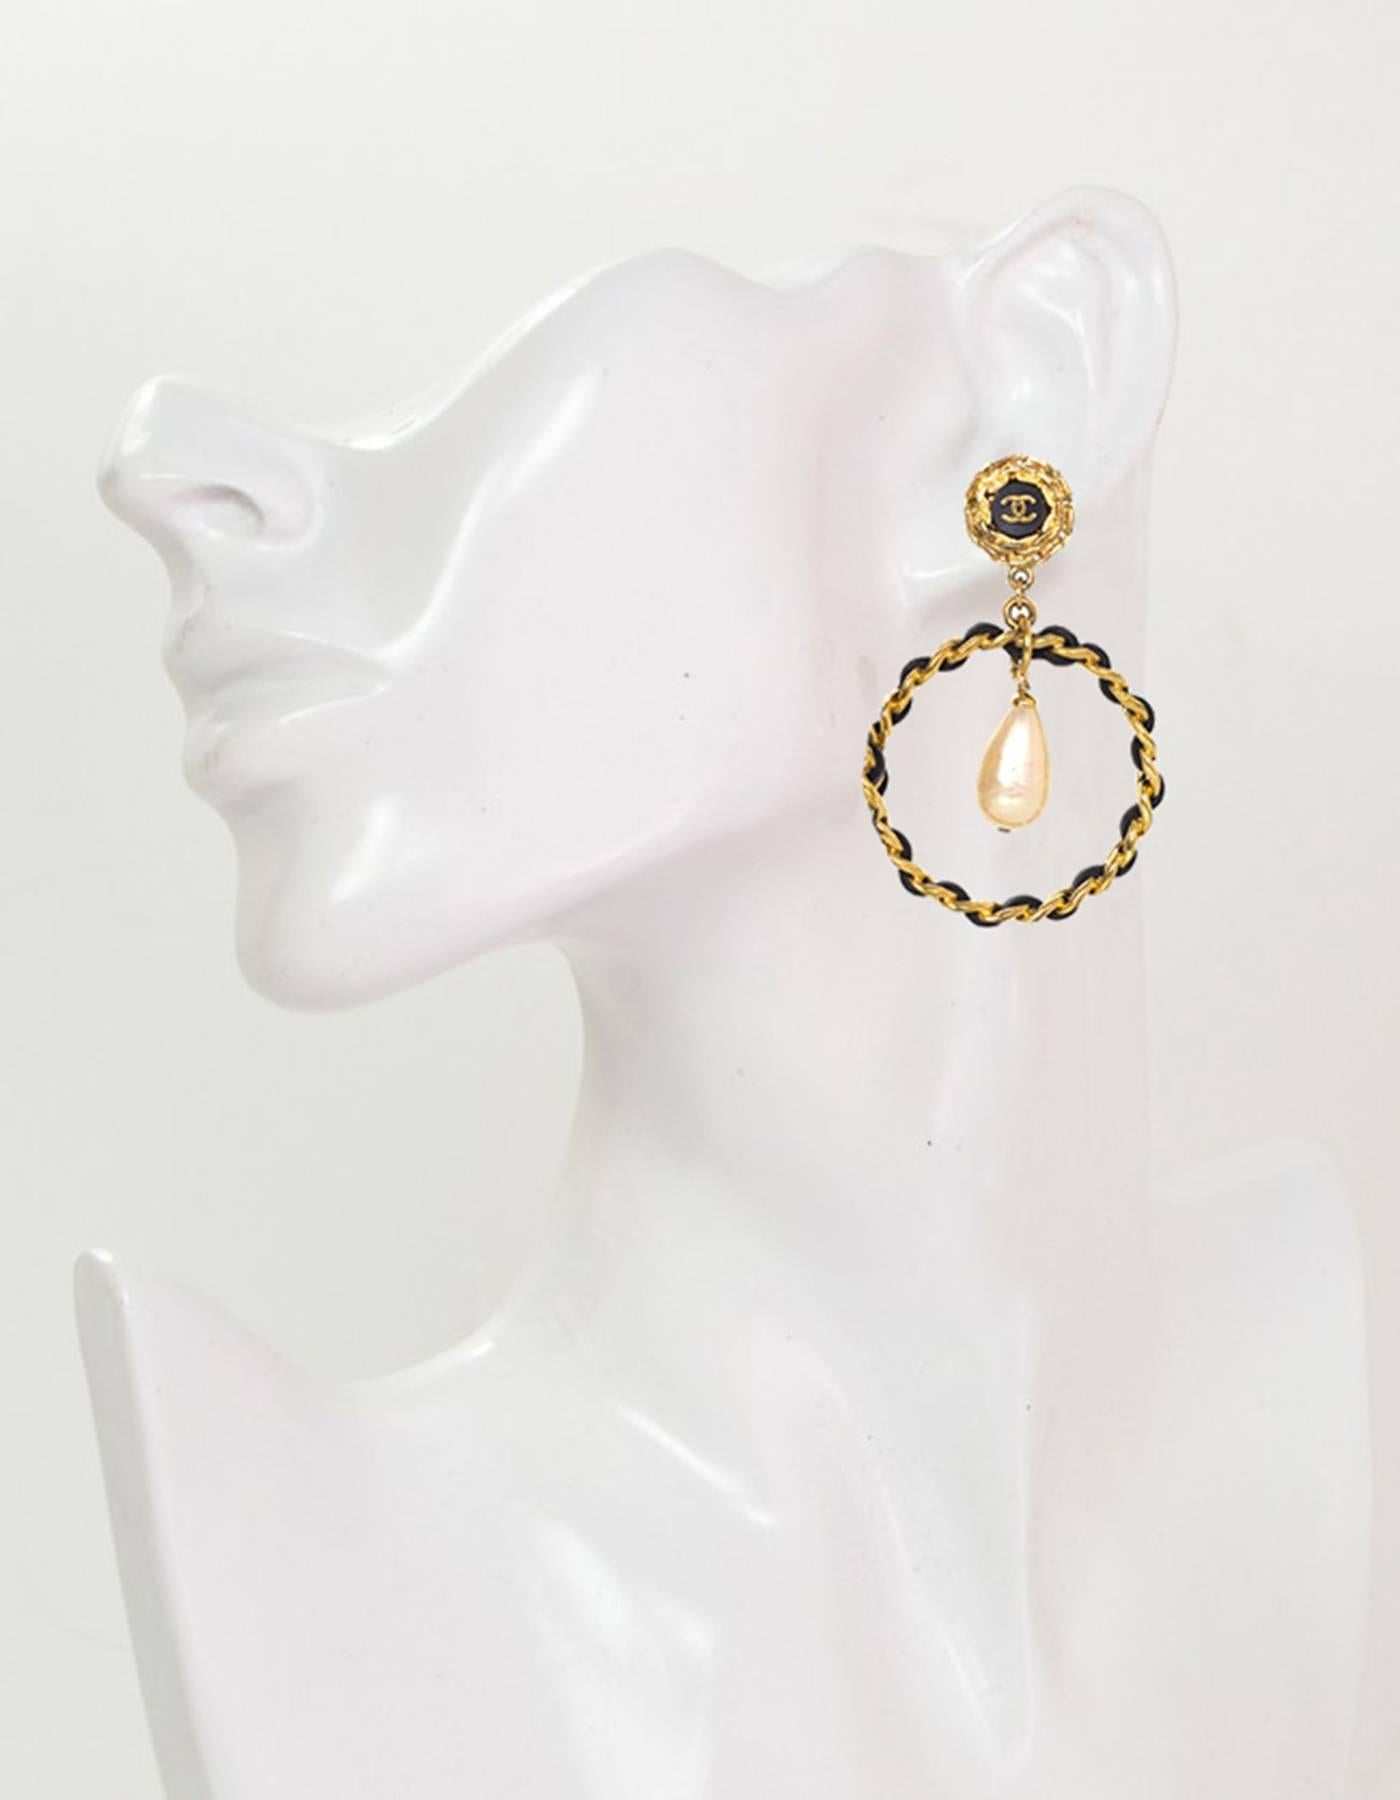 chanel earrings vintage clip ons